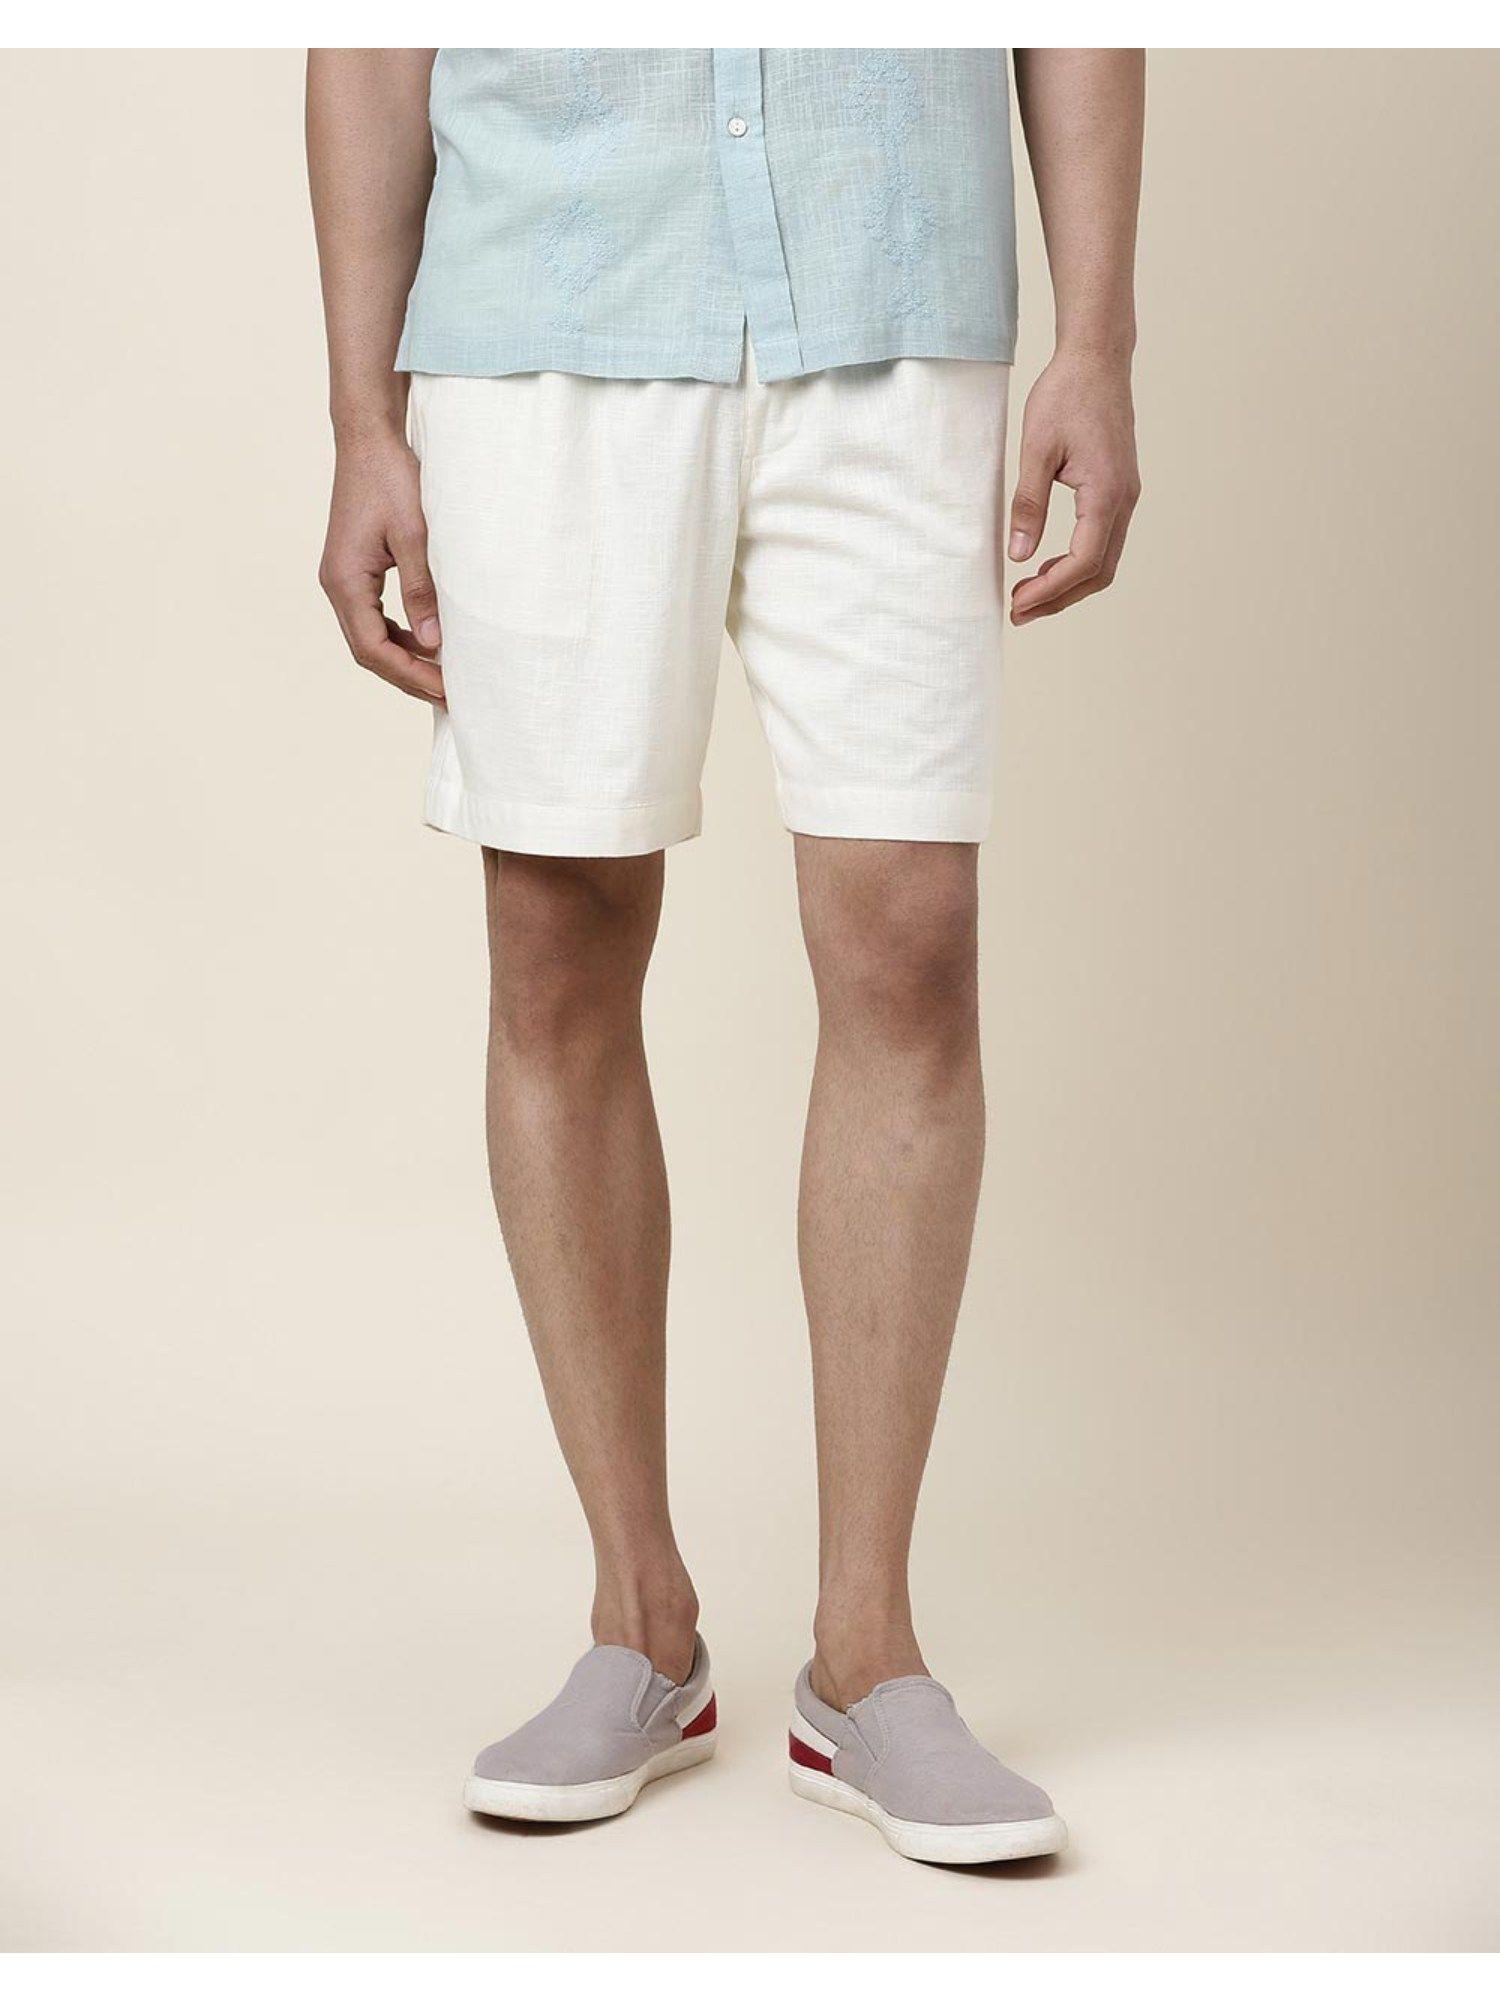 off white cotton shorts